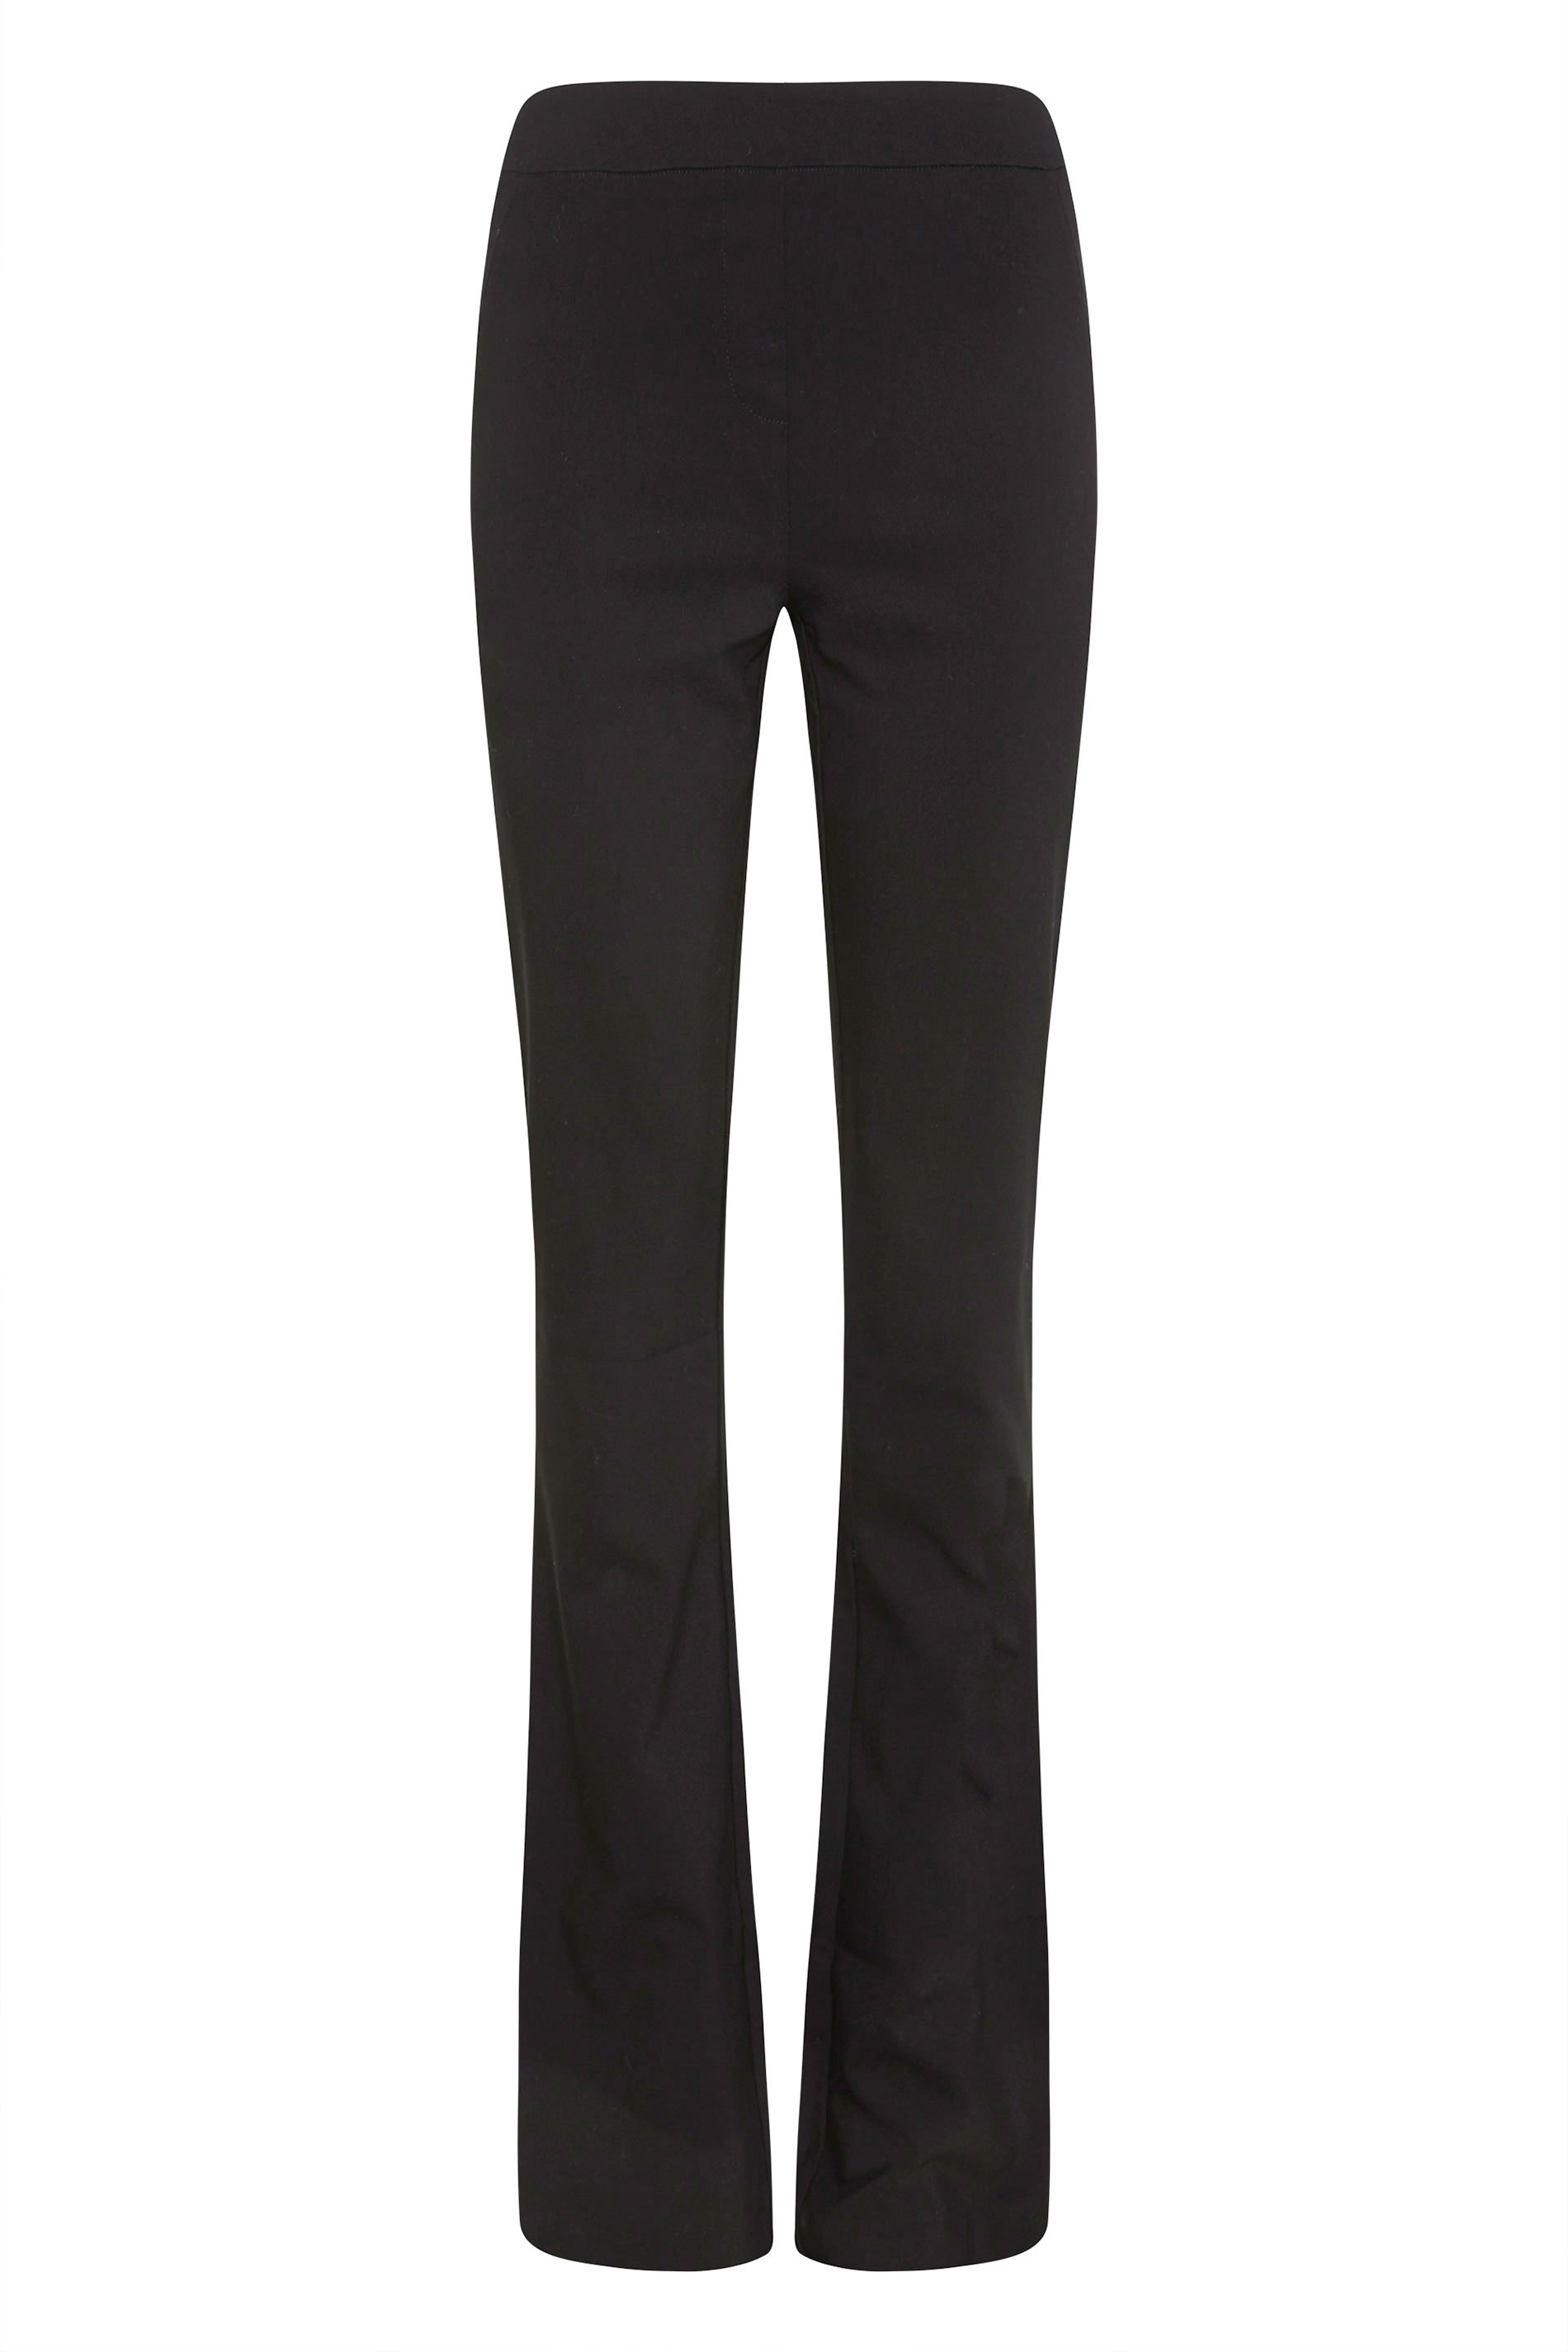 LTS Tall Women's Black Stretch Straight Leg Trousers | Long Tall Sally 2